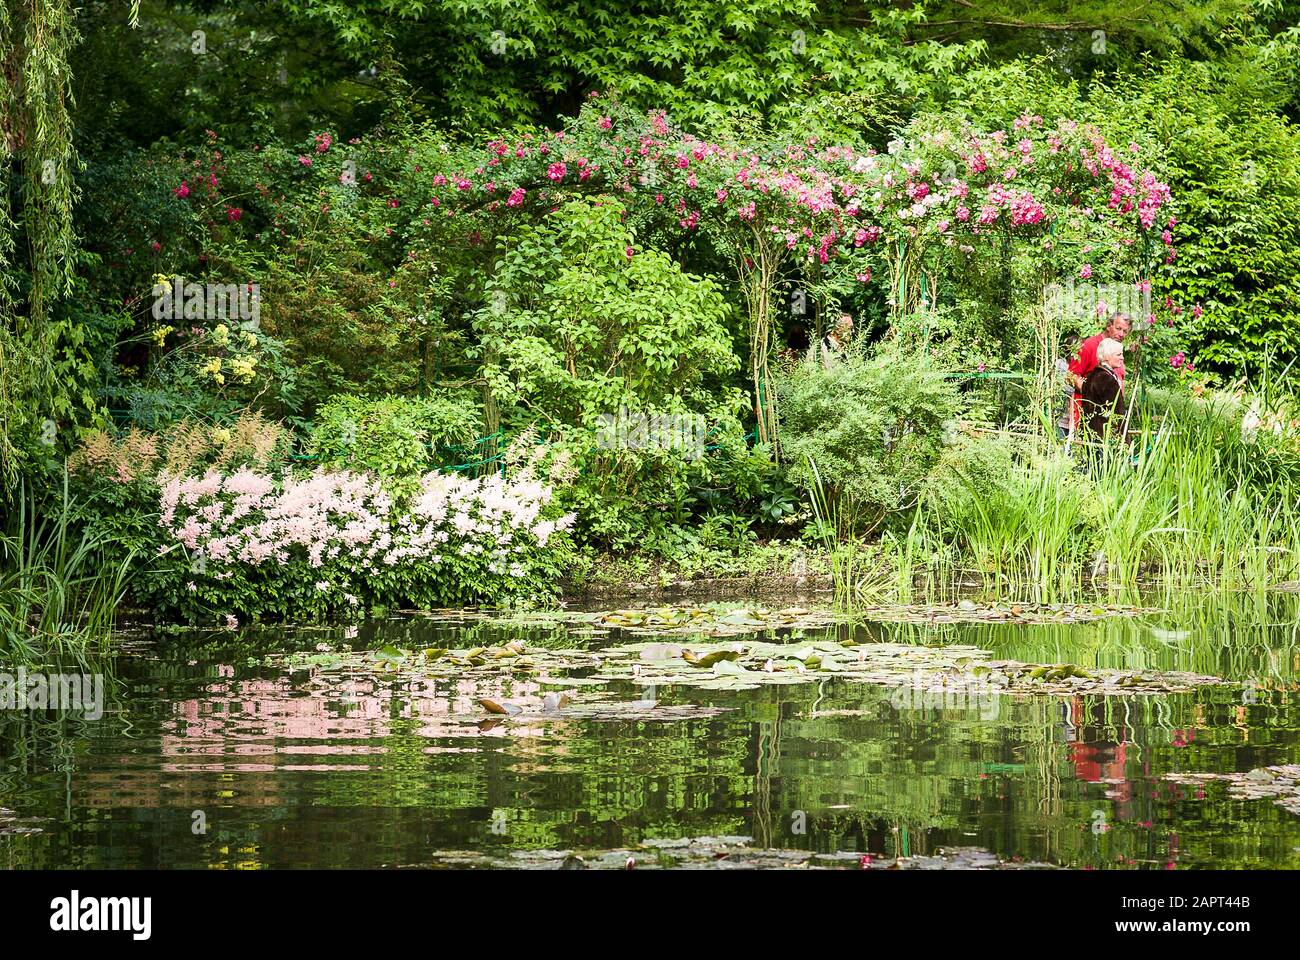 Monet's garden - across the waterlily pool - a peaceful scene Stock Photo